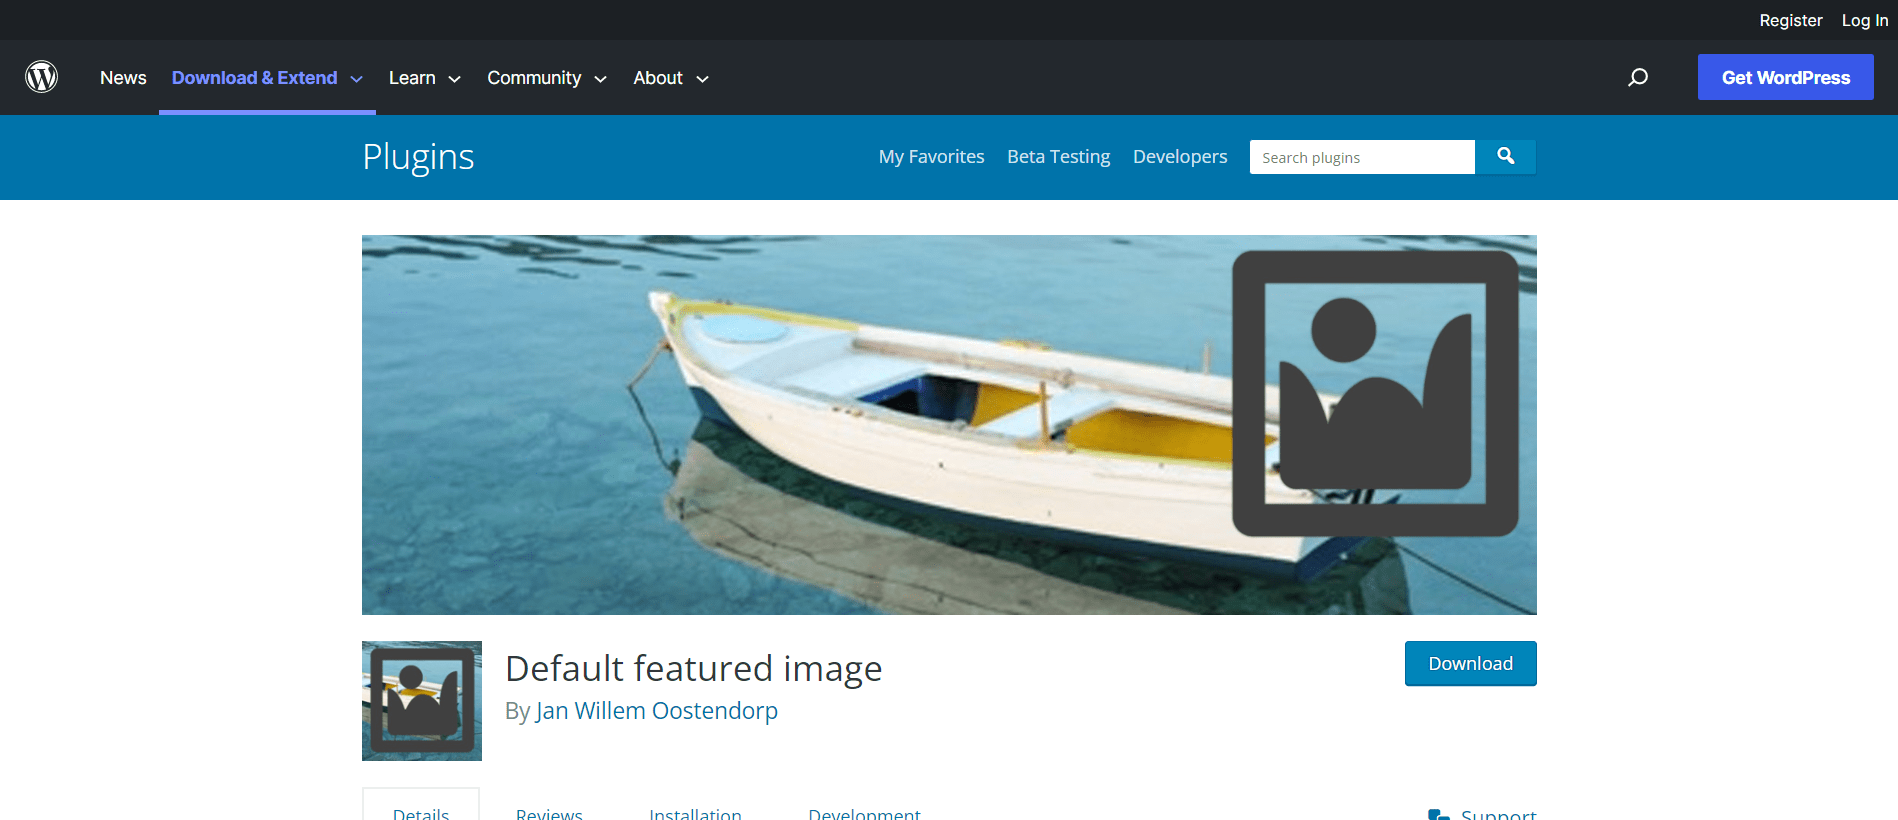 default featured image plugin